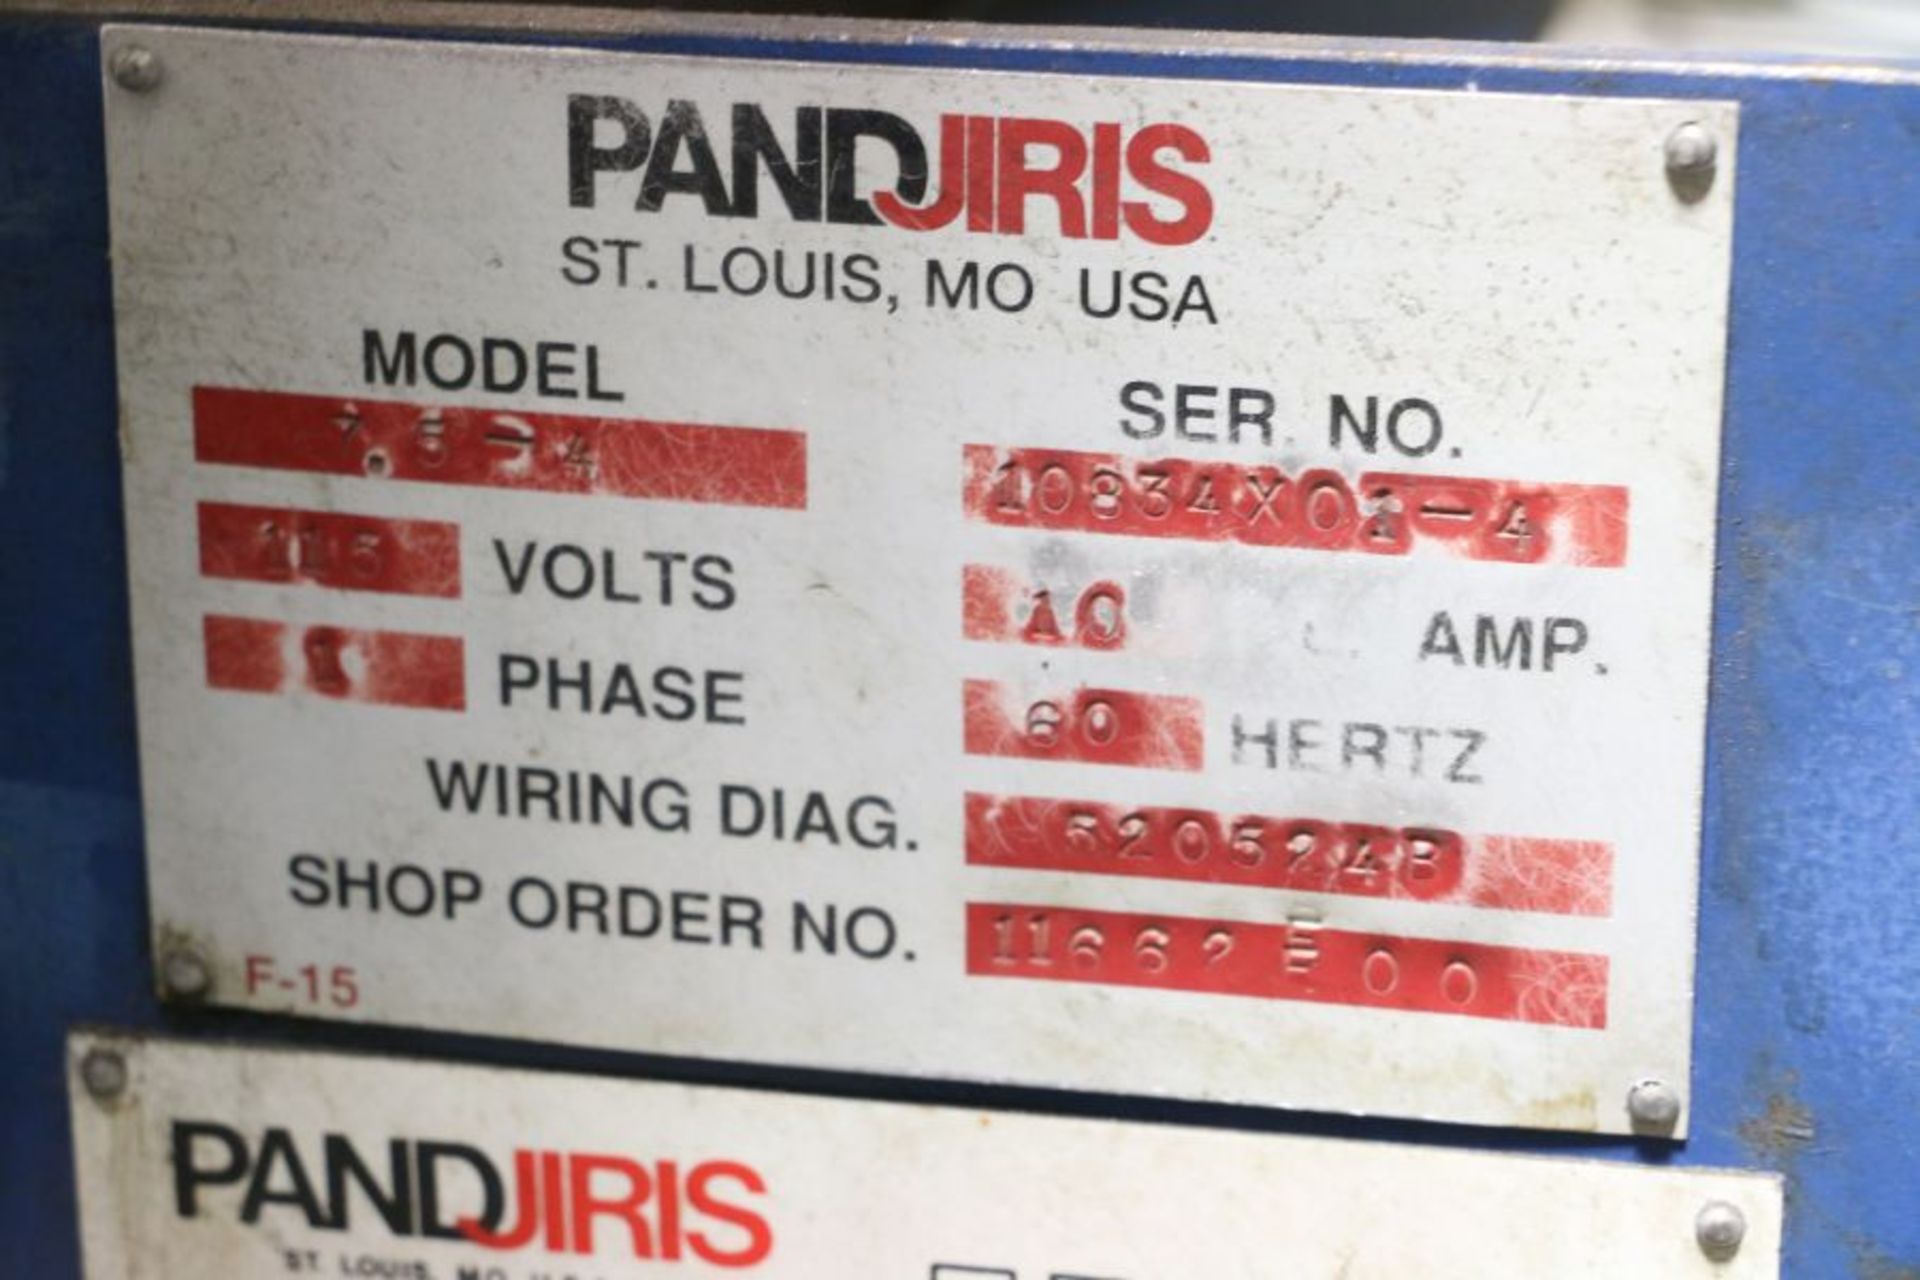 Pandjiris 75-4 16" Welding Positioner, s/n 10834X01-4 - Image 7 of 7